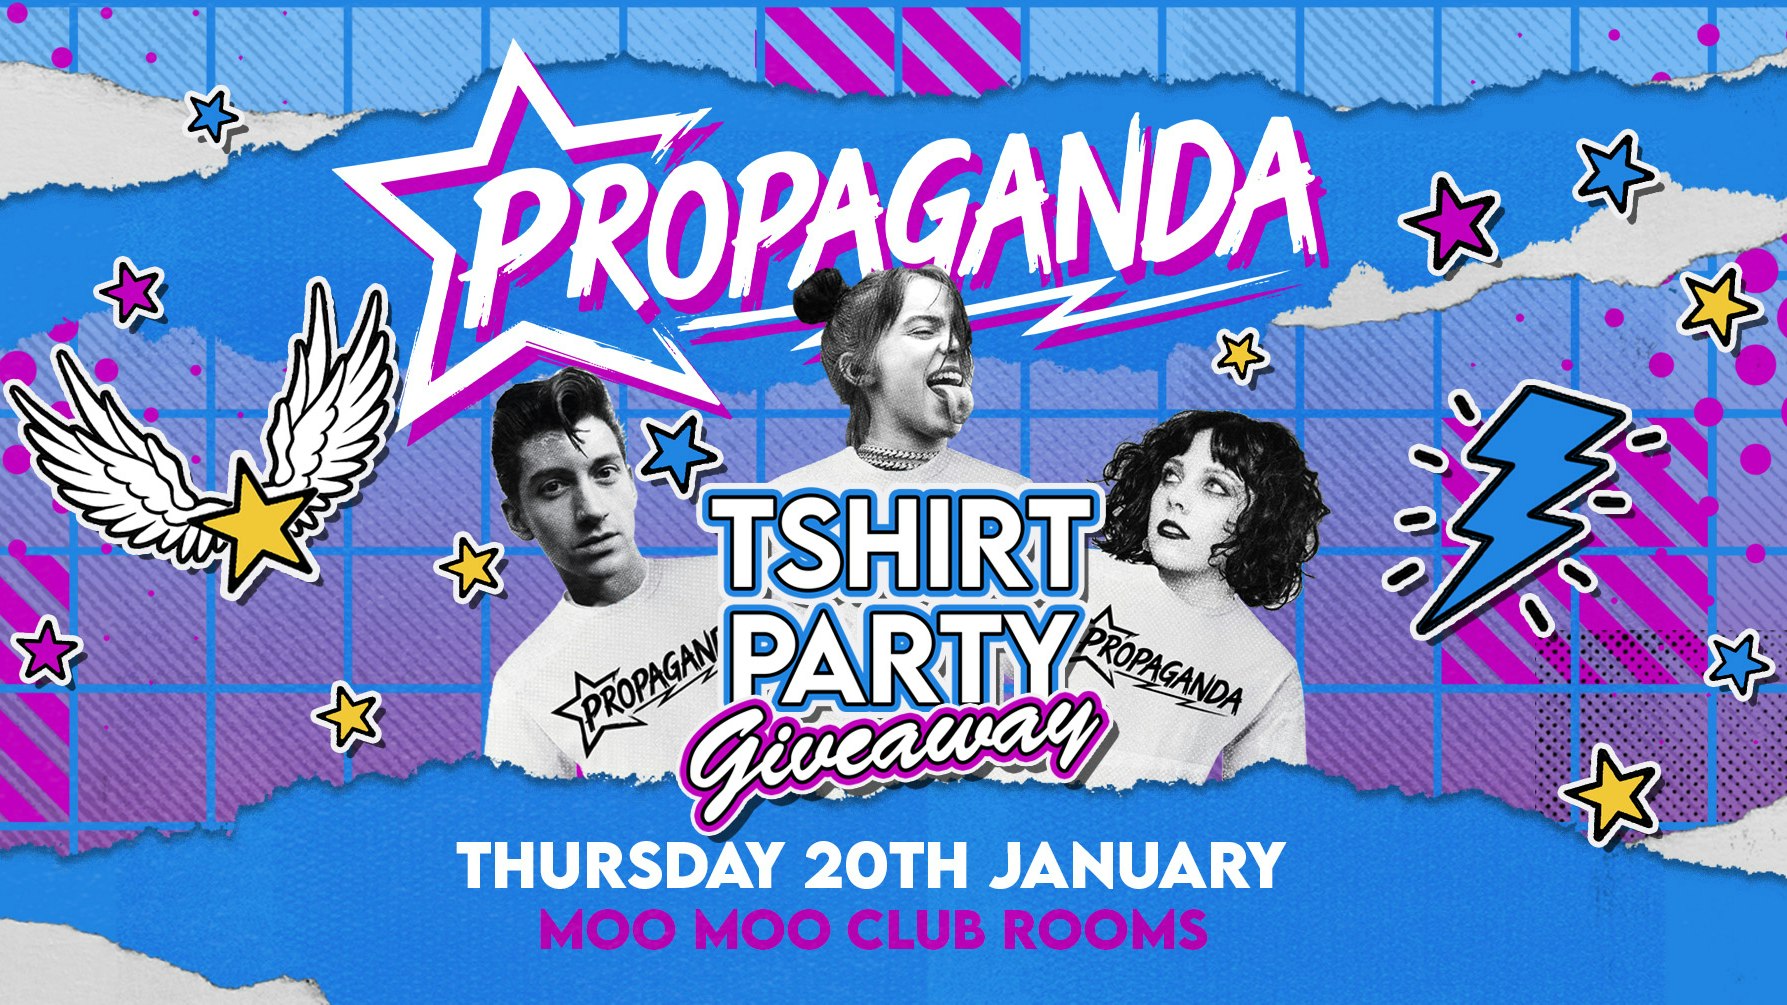 Propaganda Cheltenham – T-shirt Giveaway Party!